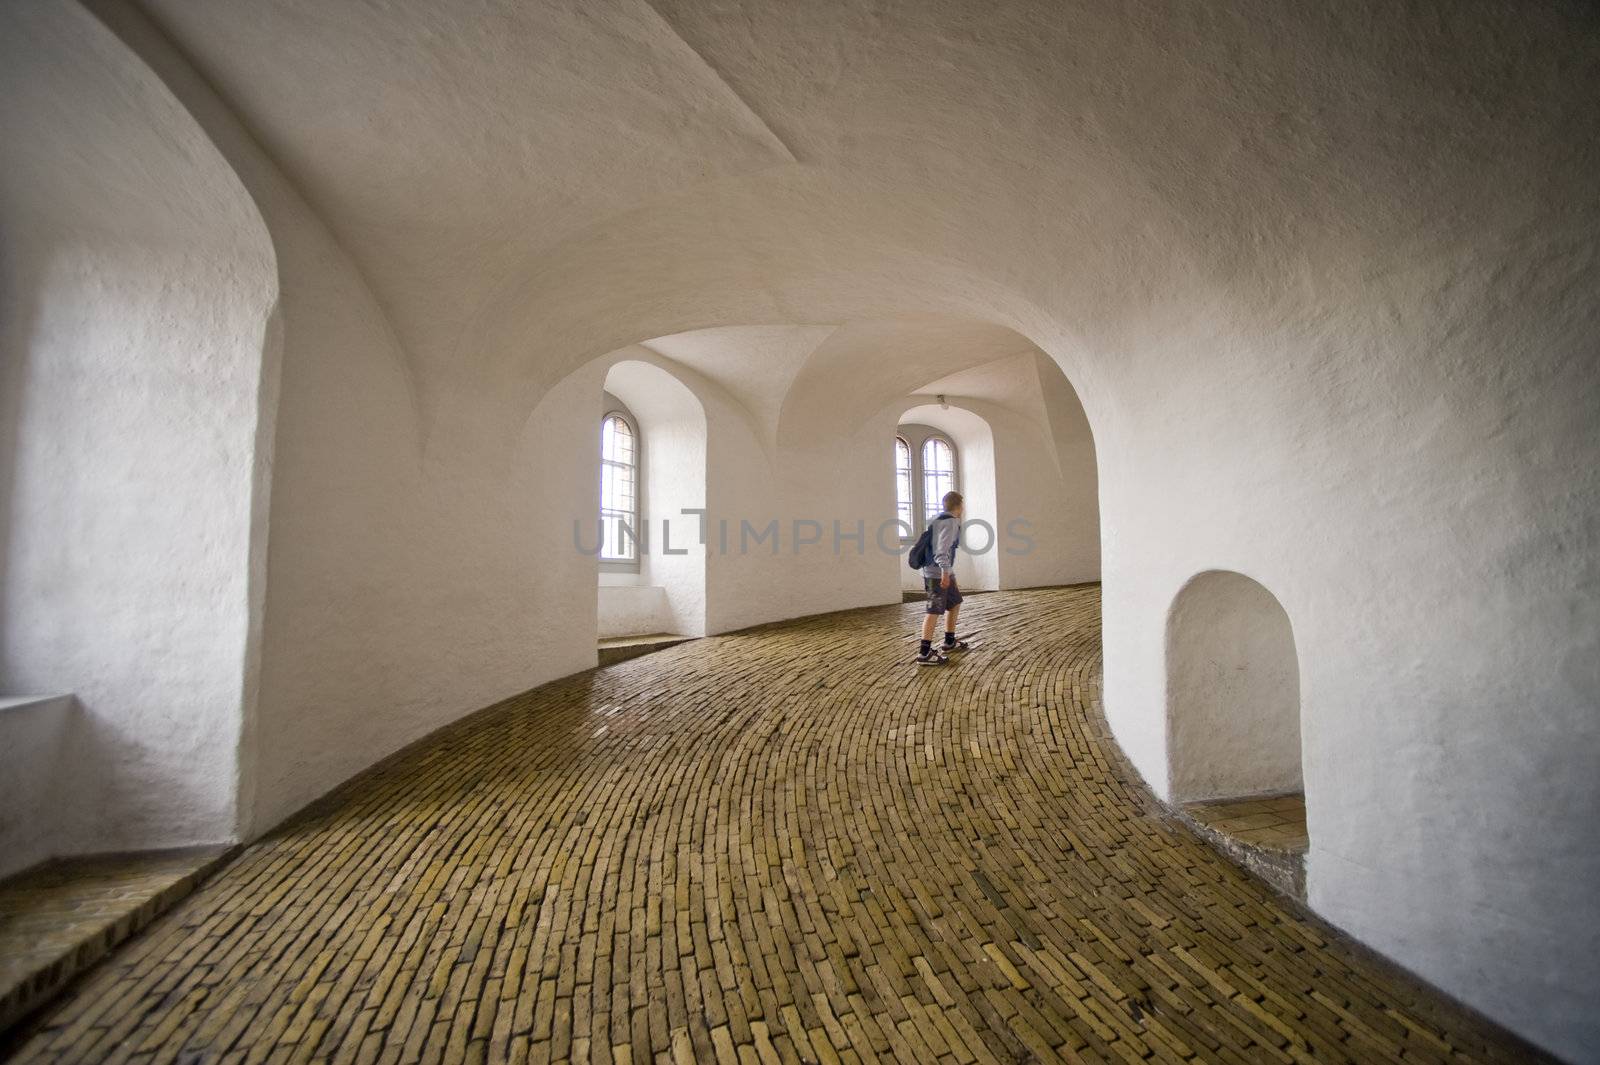 Lifting a corridor in a round tower in Copenhagen Denmark